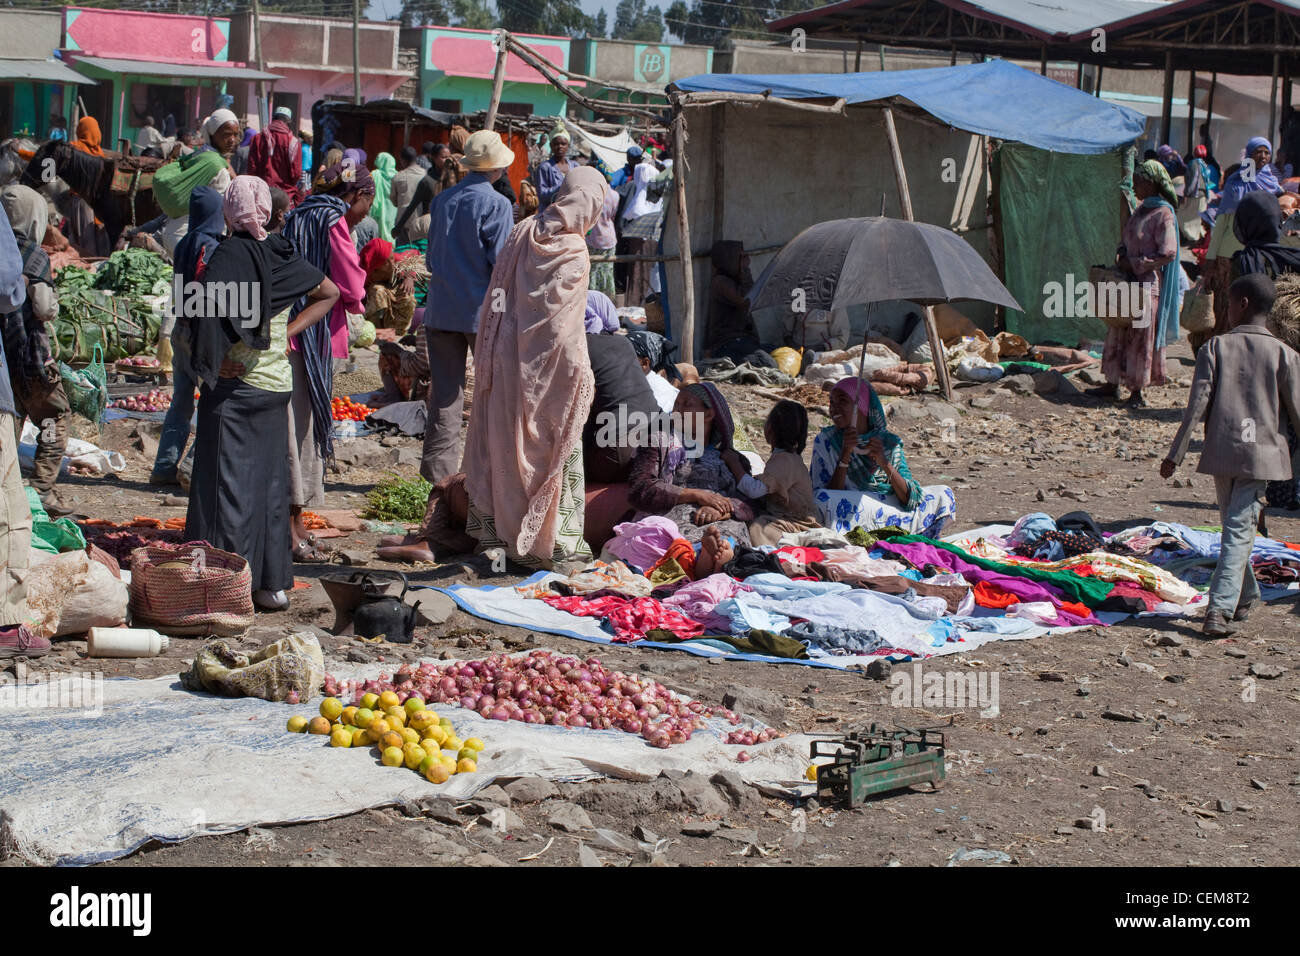 Adaba Market. Bale mountains. Ethiopia. Vegetable, fruit and clothing stalls amongst others. Stock Photo